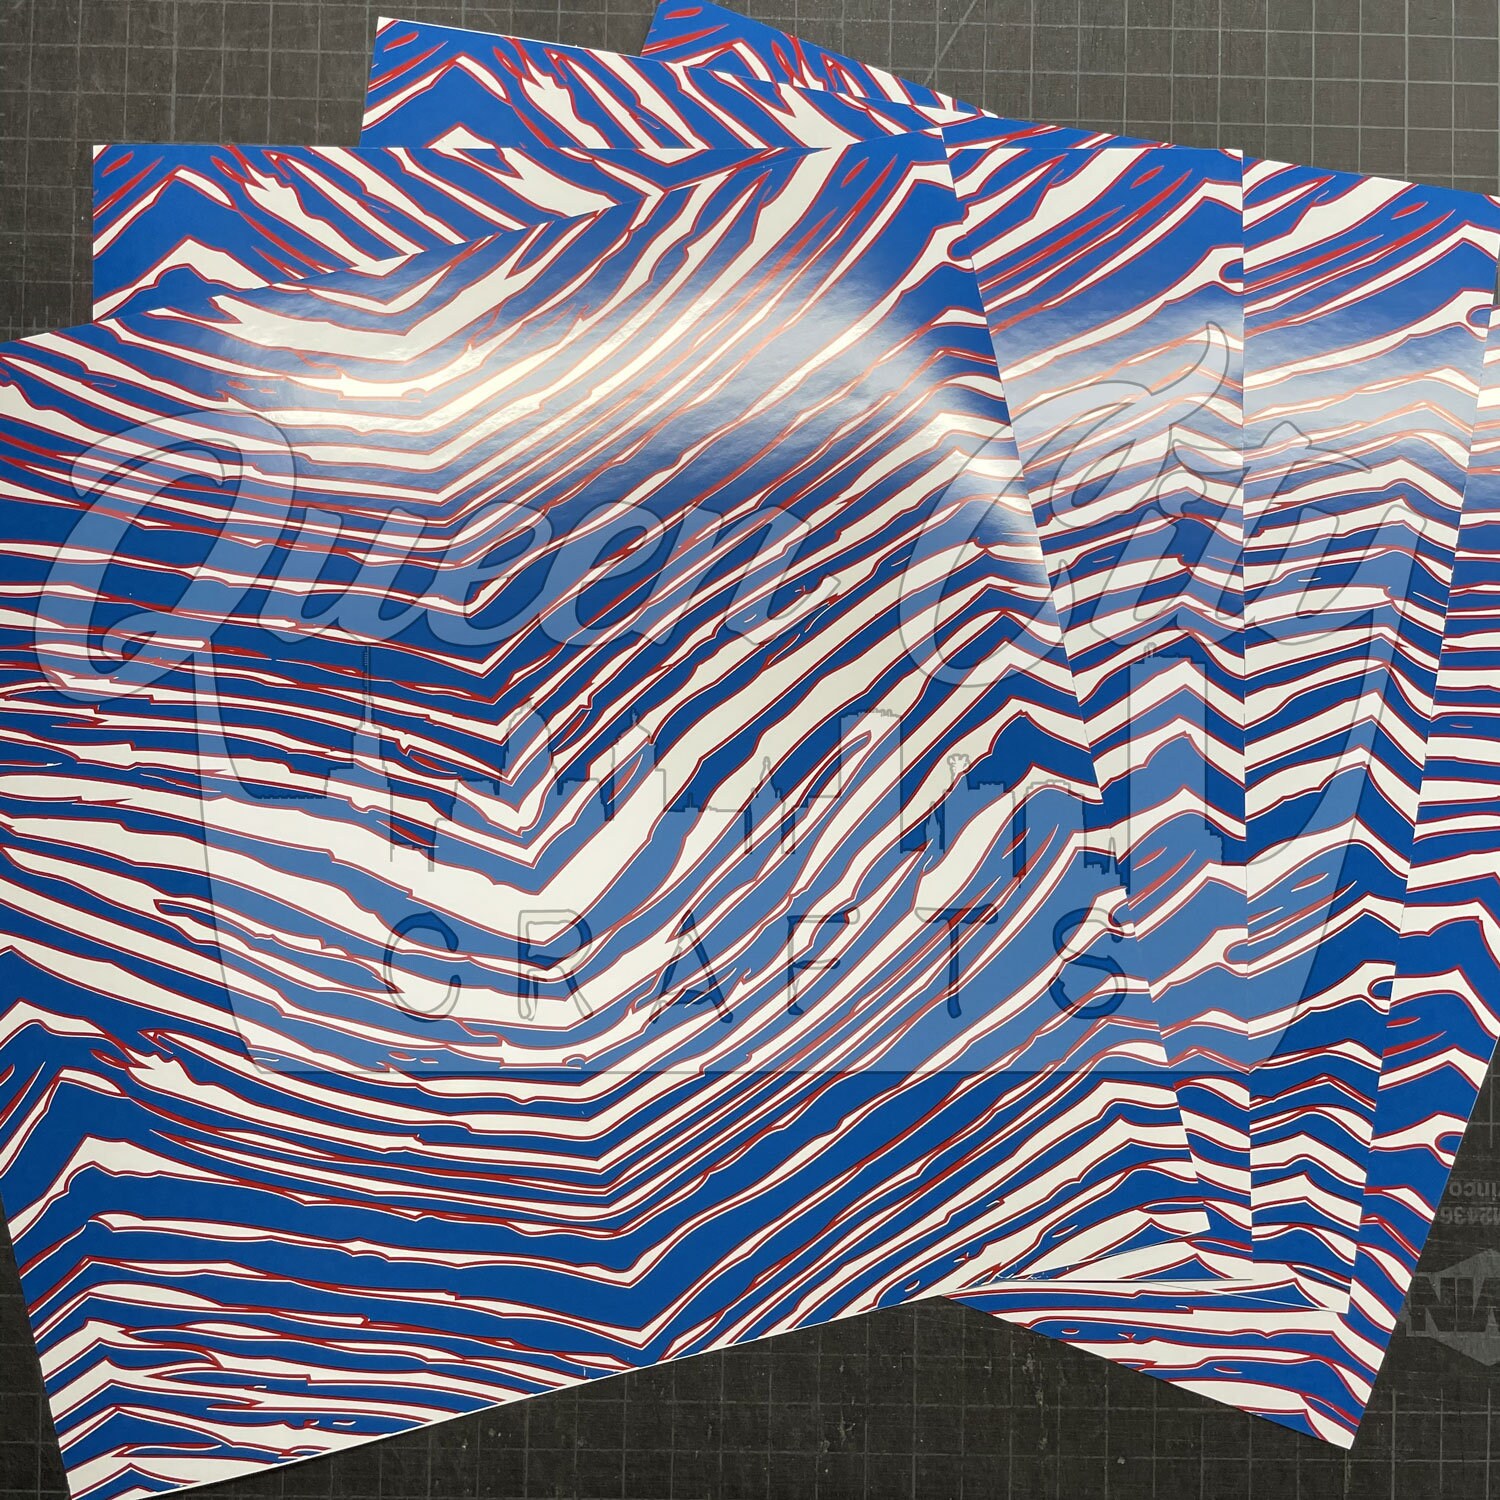 Patterned Vinyl, Red, Blue and White Zebra Print Craft Vinyl Sheet